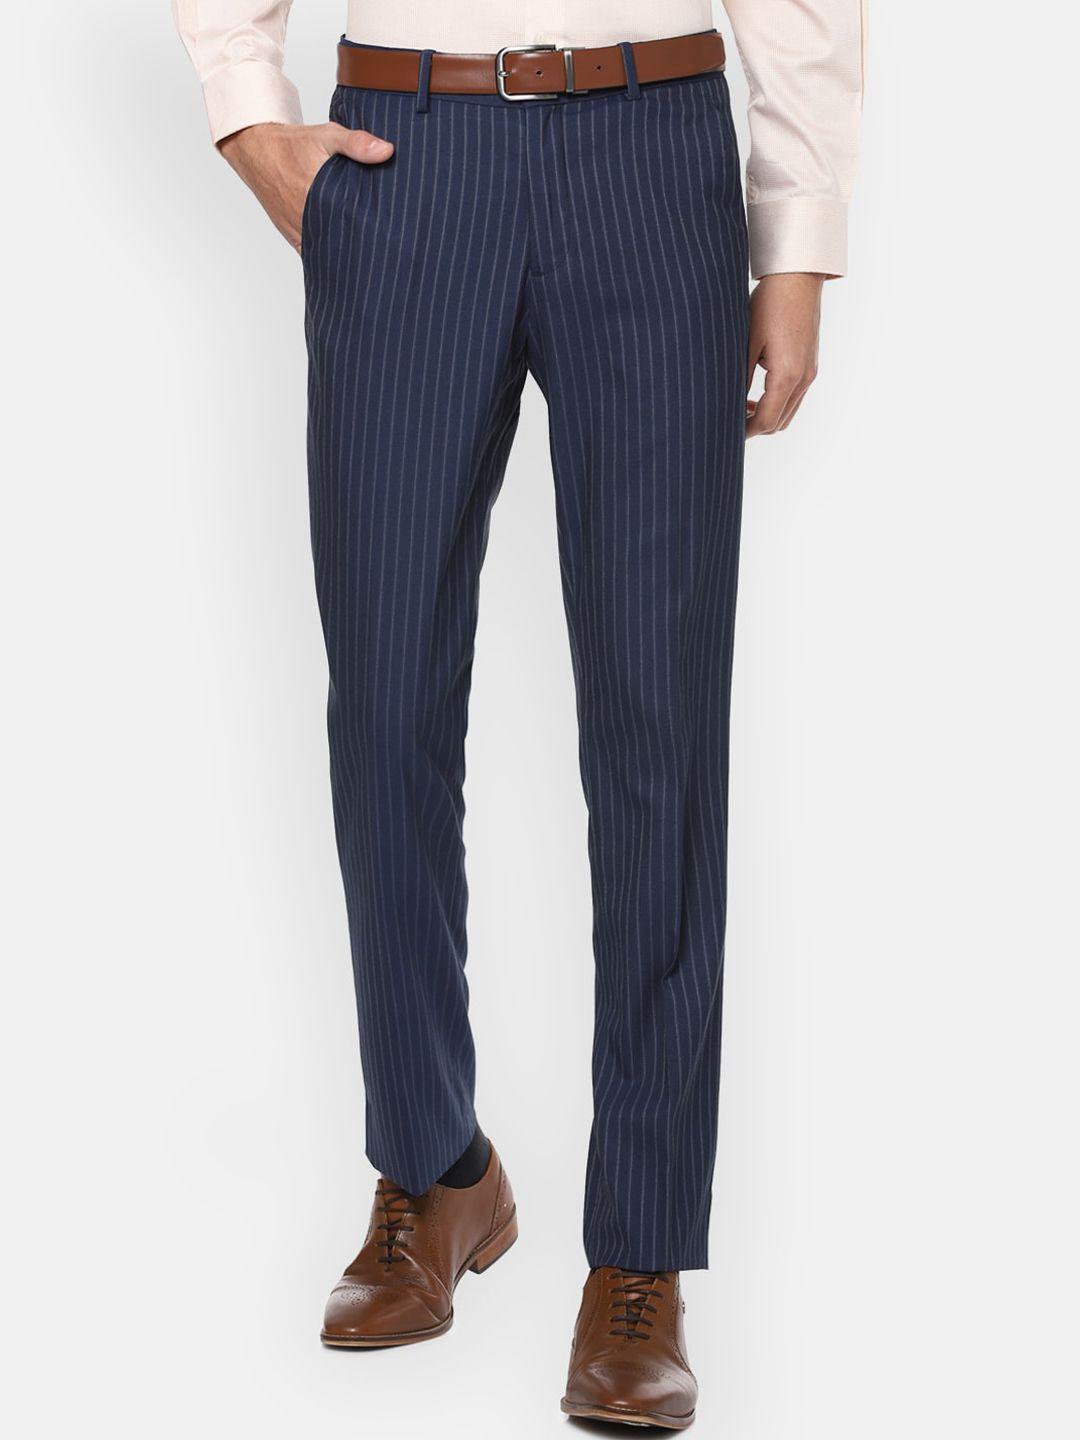 louis-philippe-men-navy-blue-striped-slim-fit-trousers